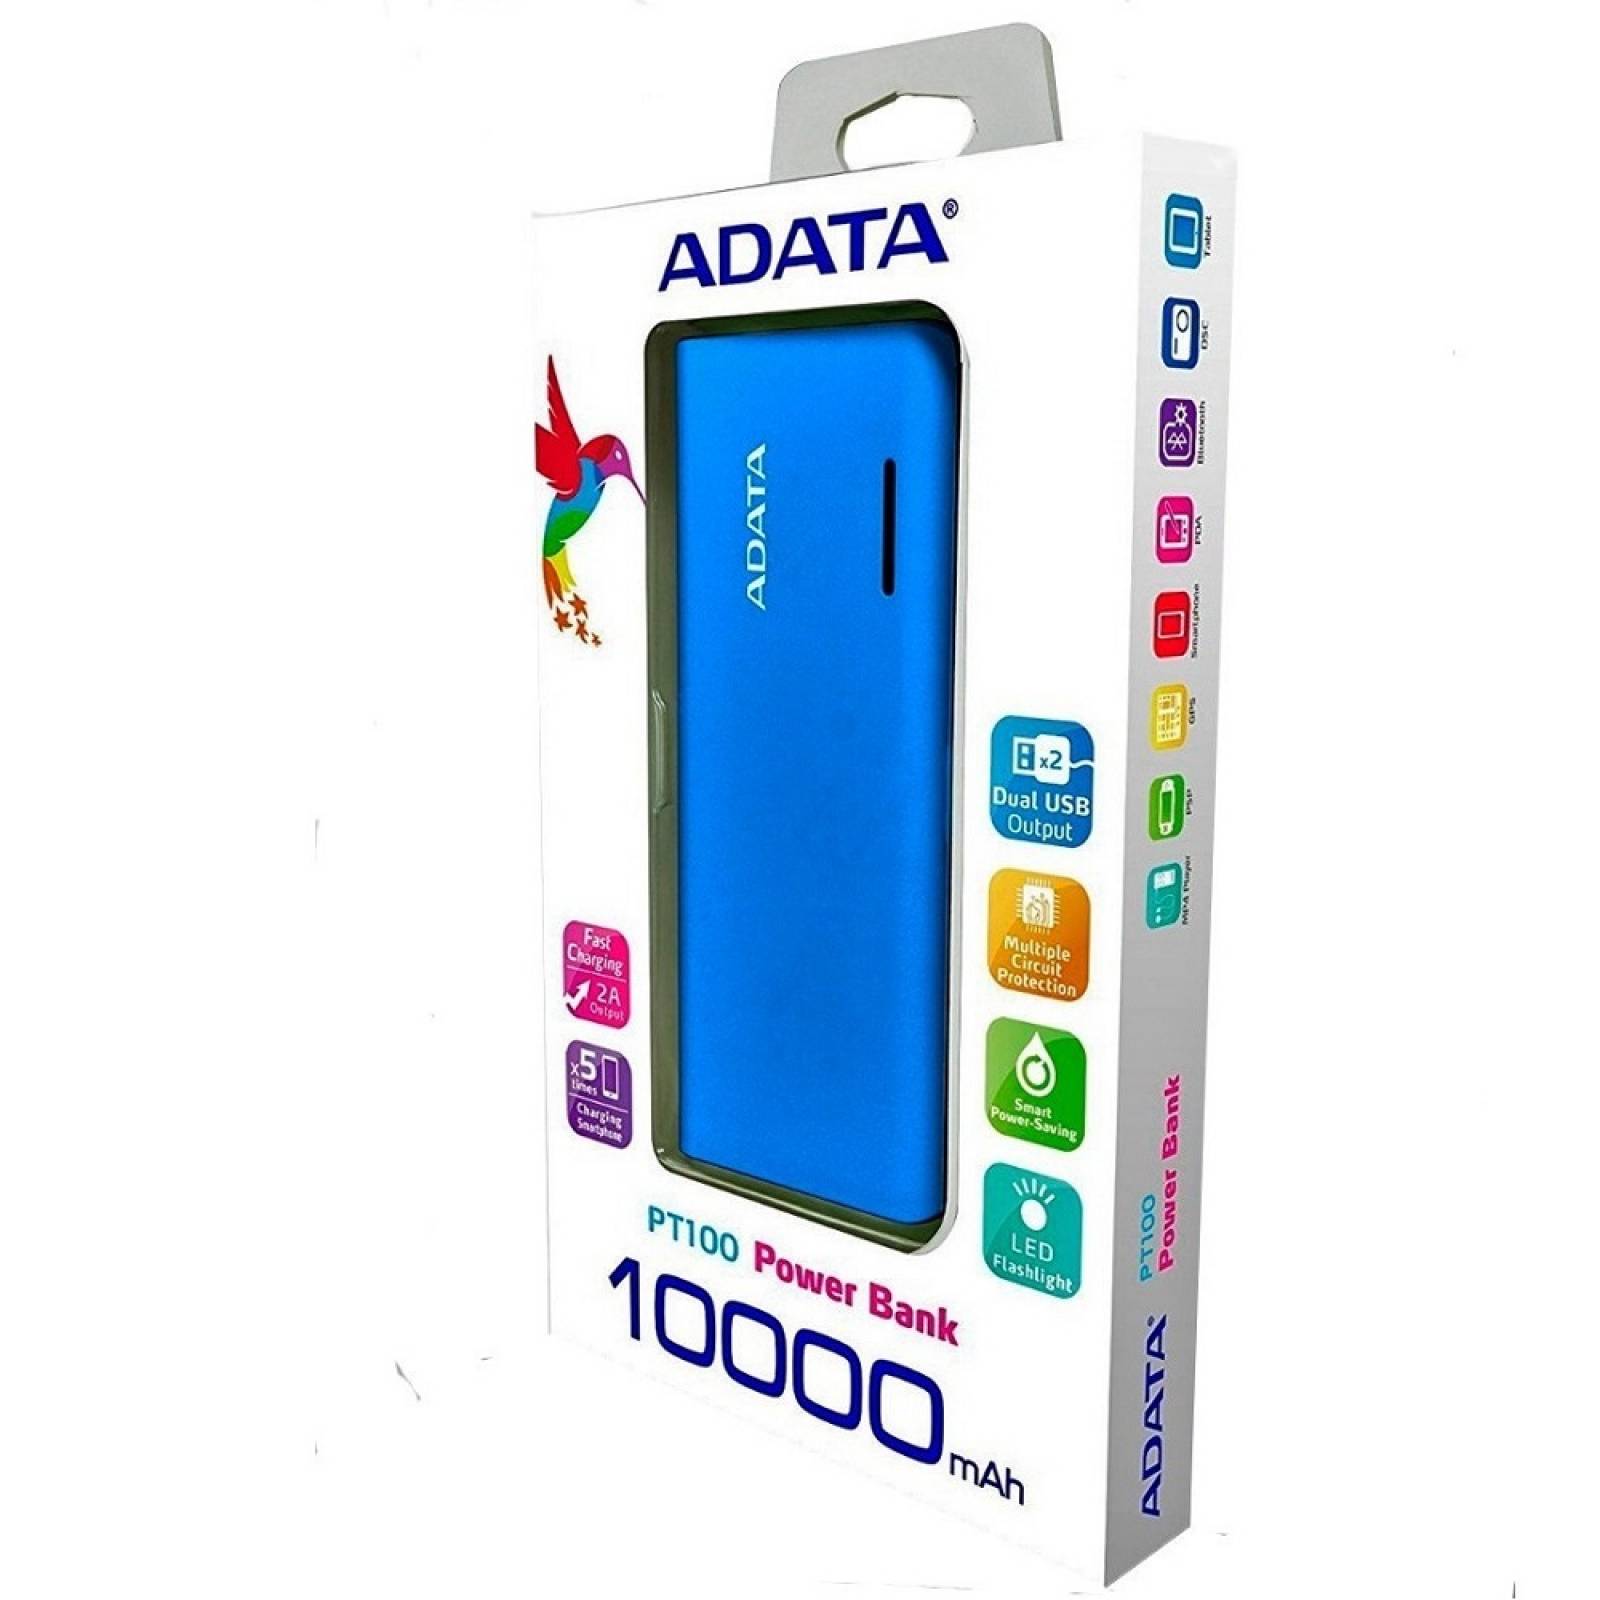 Power Bank ADATA PT100 azul 10000 mAh 2 entradas USB